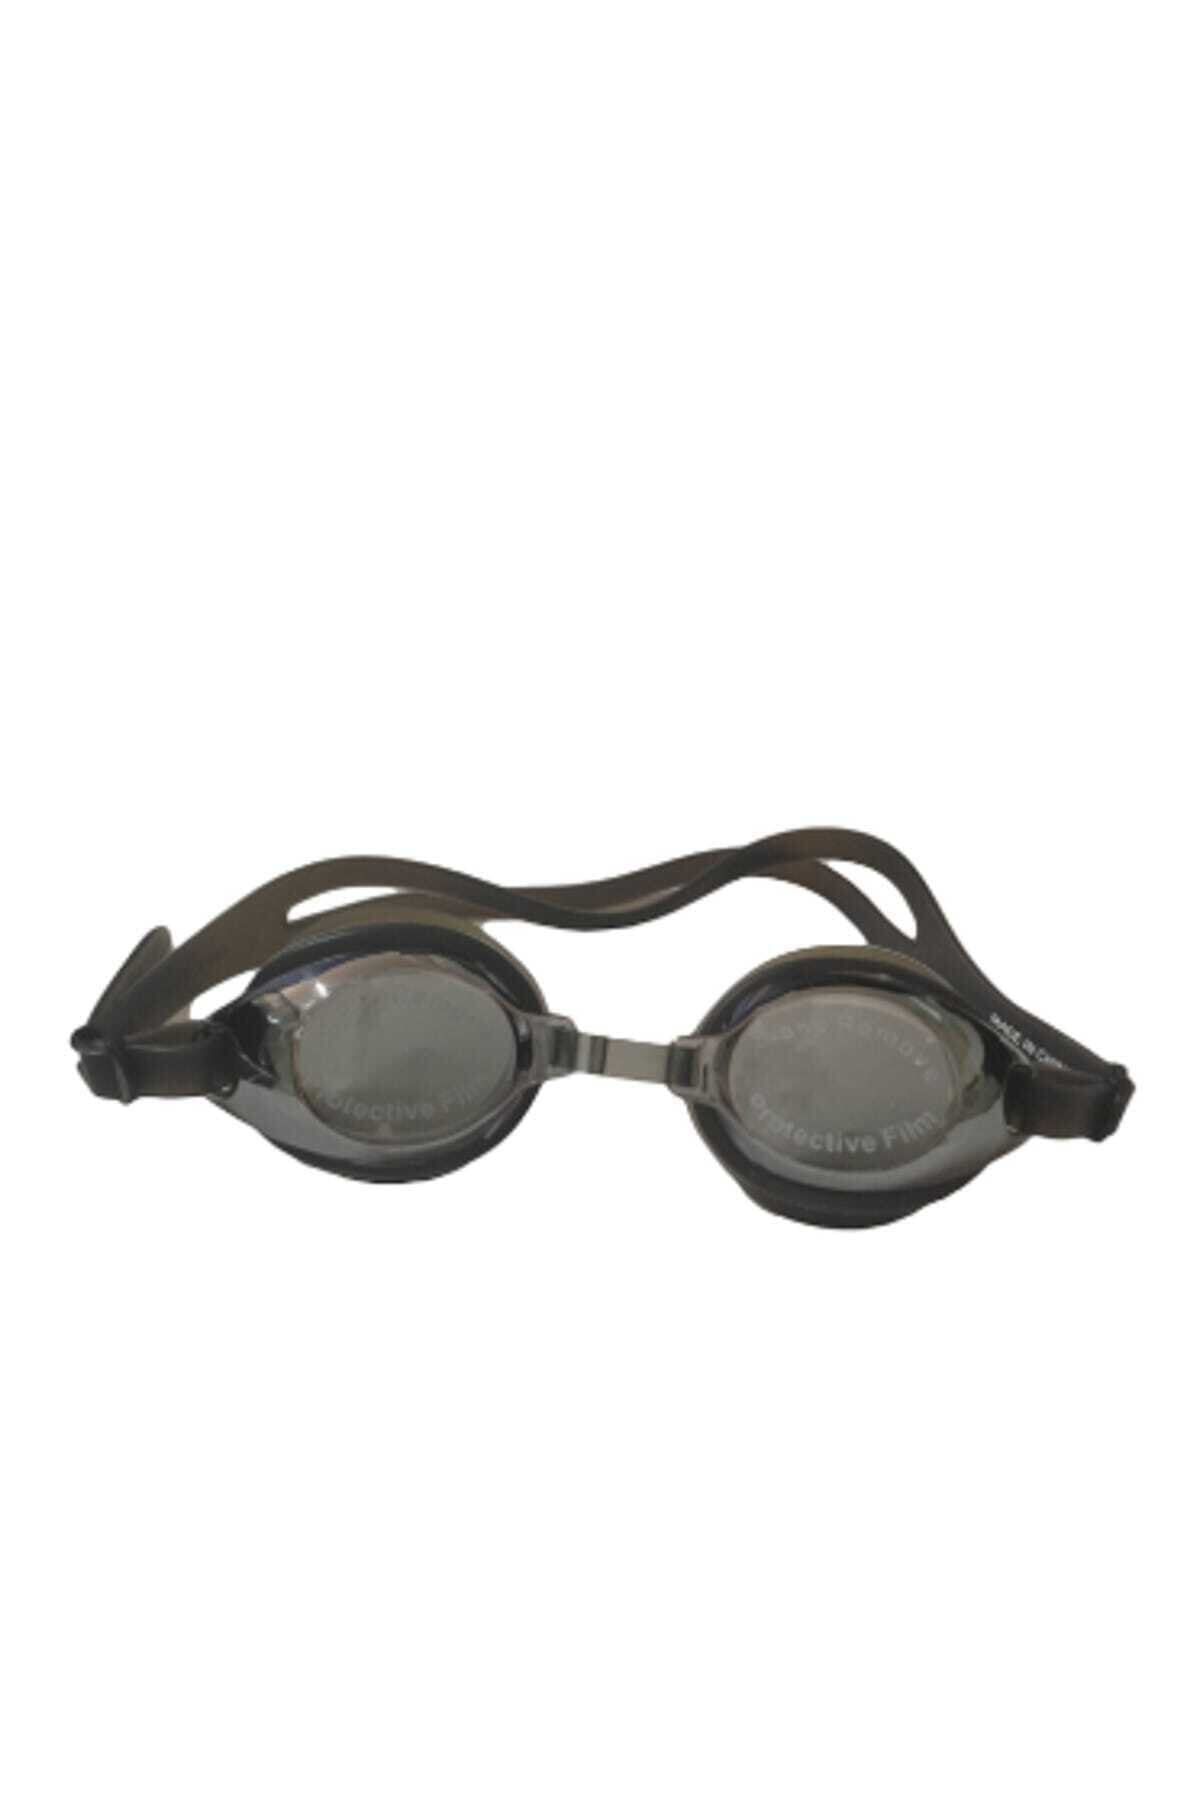 SELEX Sg 5000 Aynalı Camlı Yüzücü Gözlüğü Silikon & Antifog